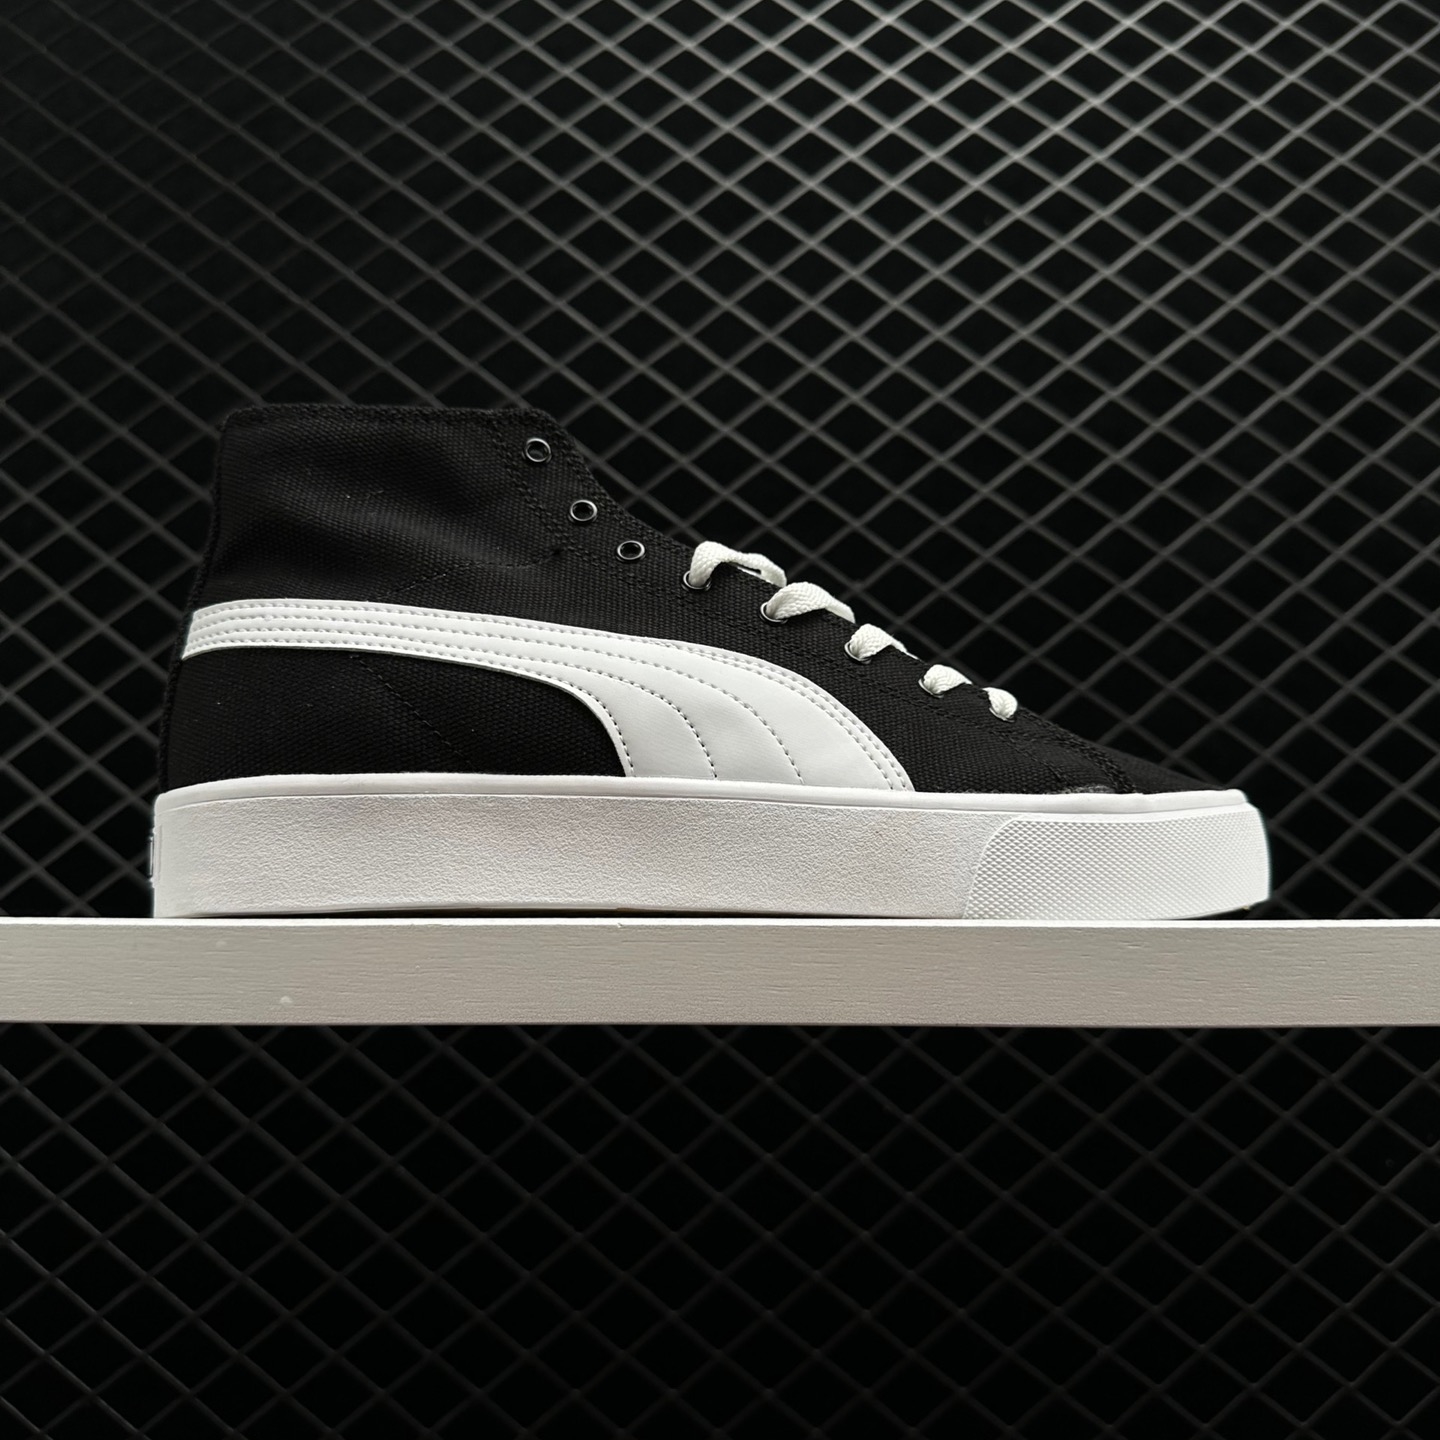 Puma Bari Mid Black White 373891 02 - Stylish and Versatile Sneakers